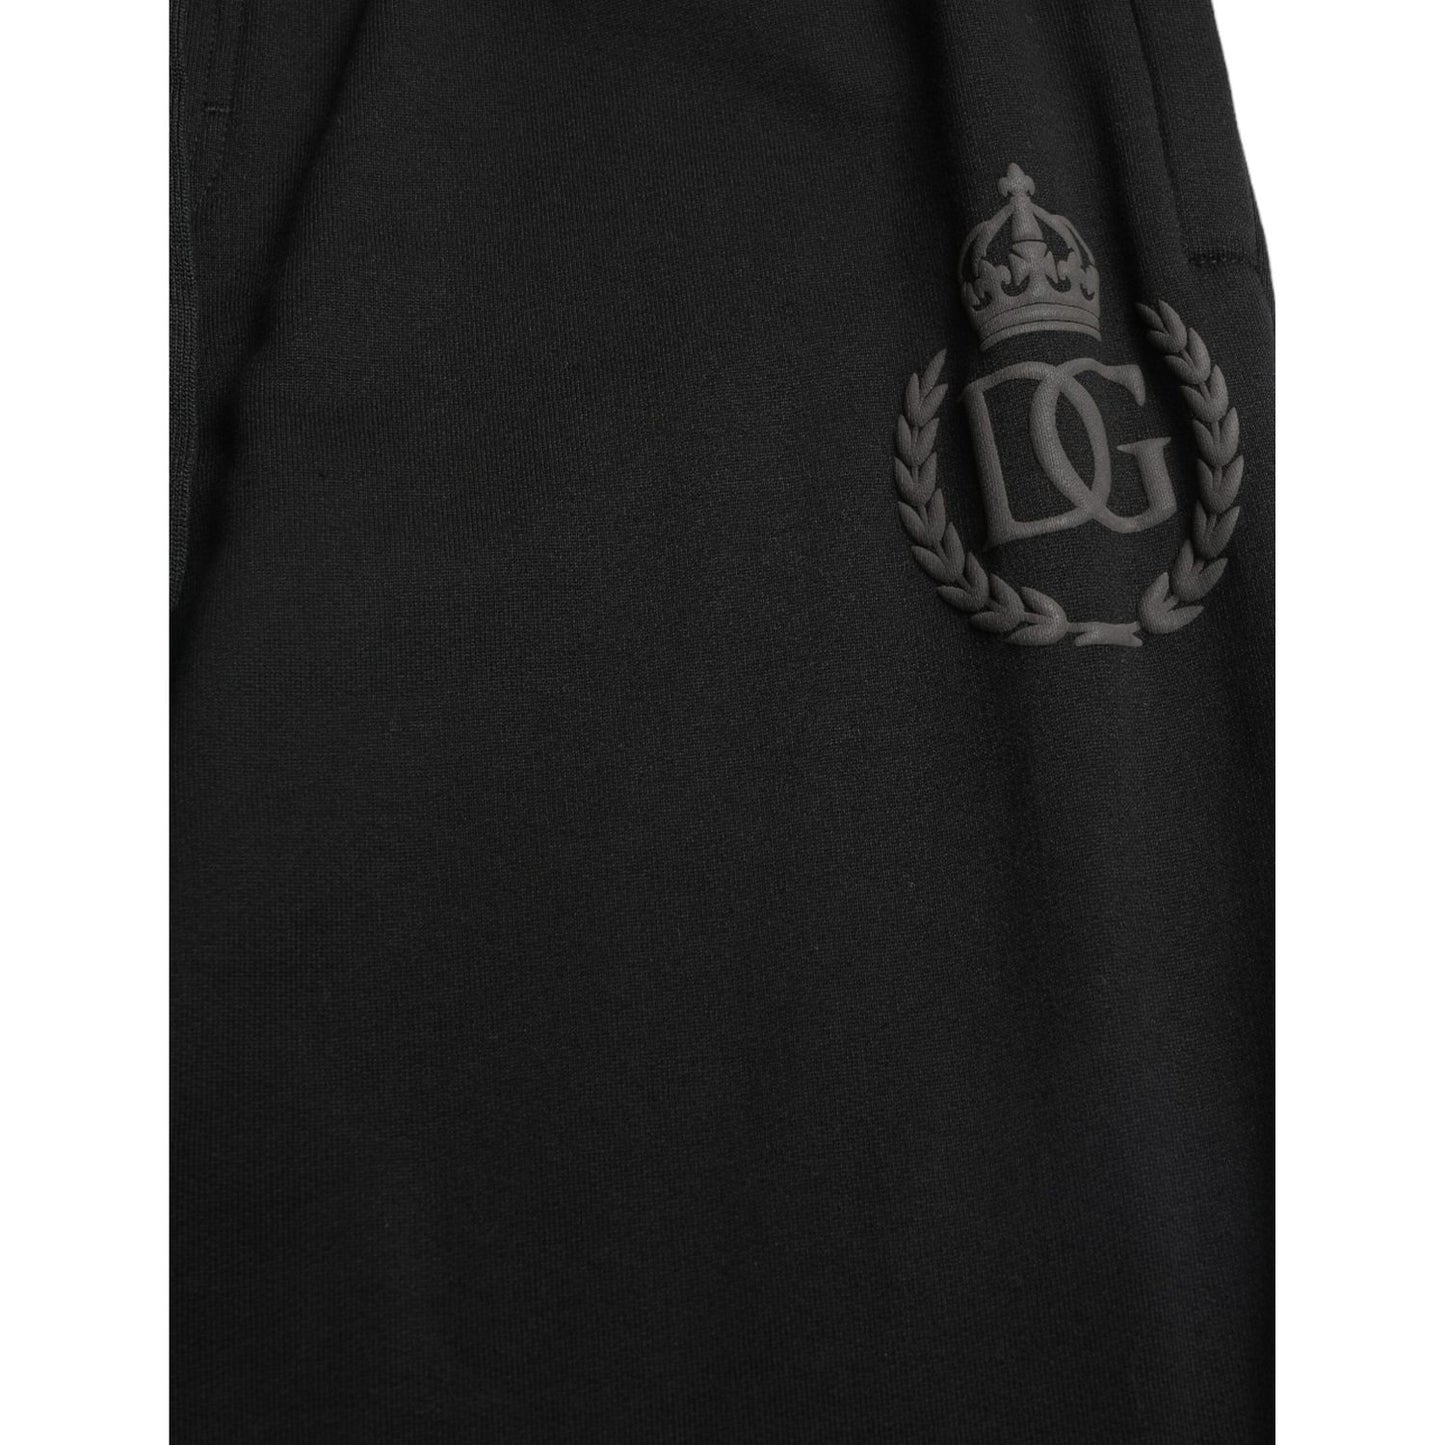 Dolce & Gabbana Elegant Black Cotton Joggers with Logo Embroidery black-dg-logo-skinny-jogger-sweatpants-pants